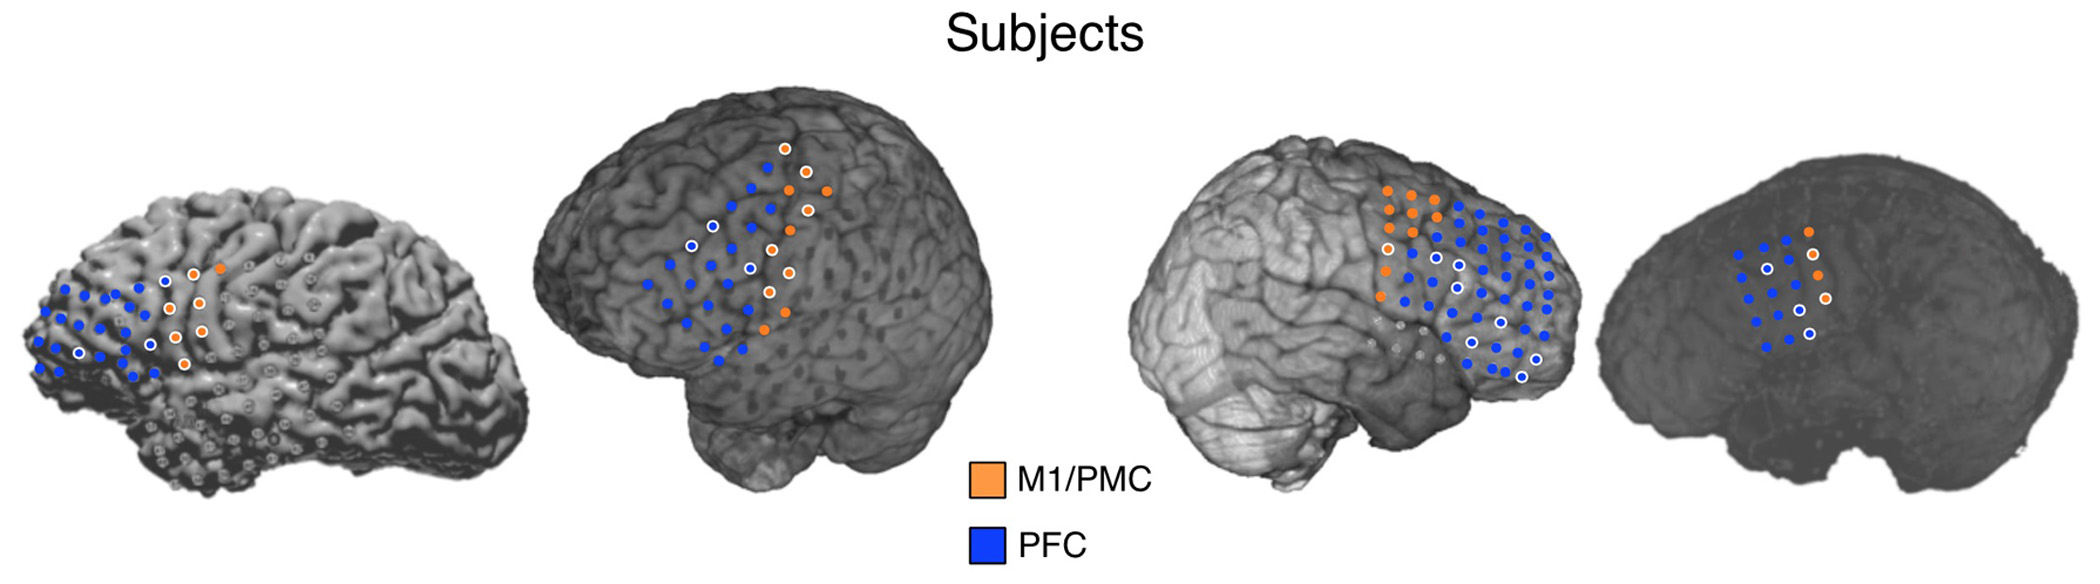 Voytek et al., Nature Neuroscience Figure 1C